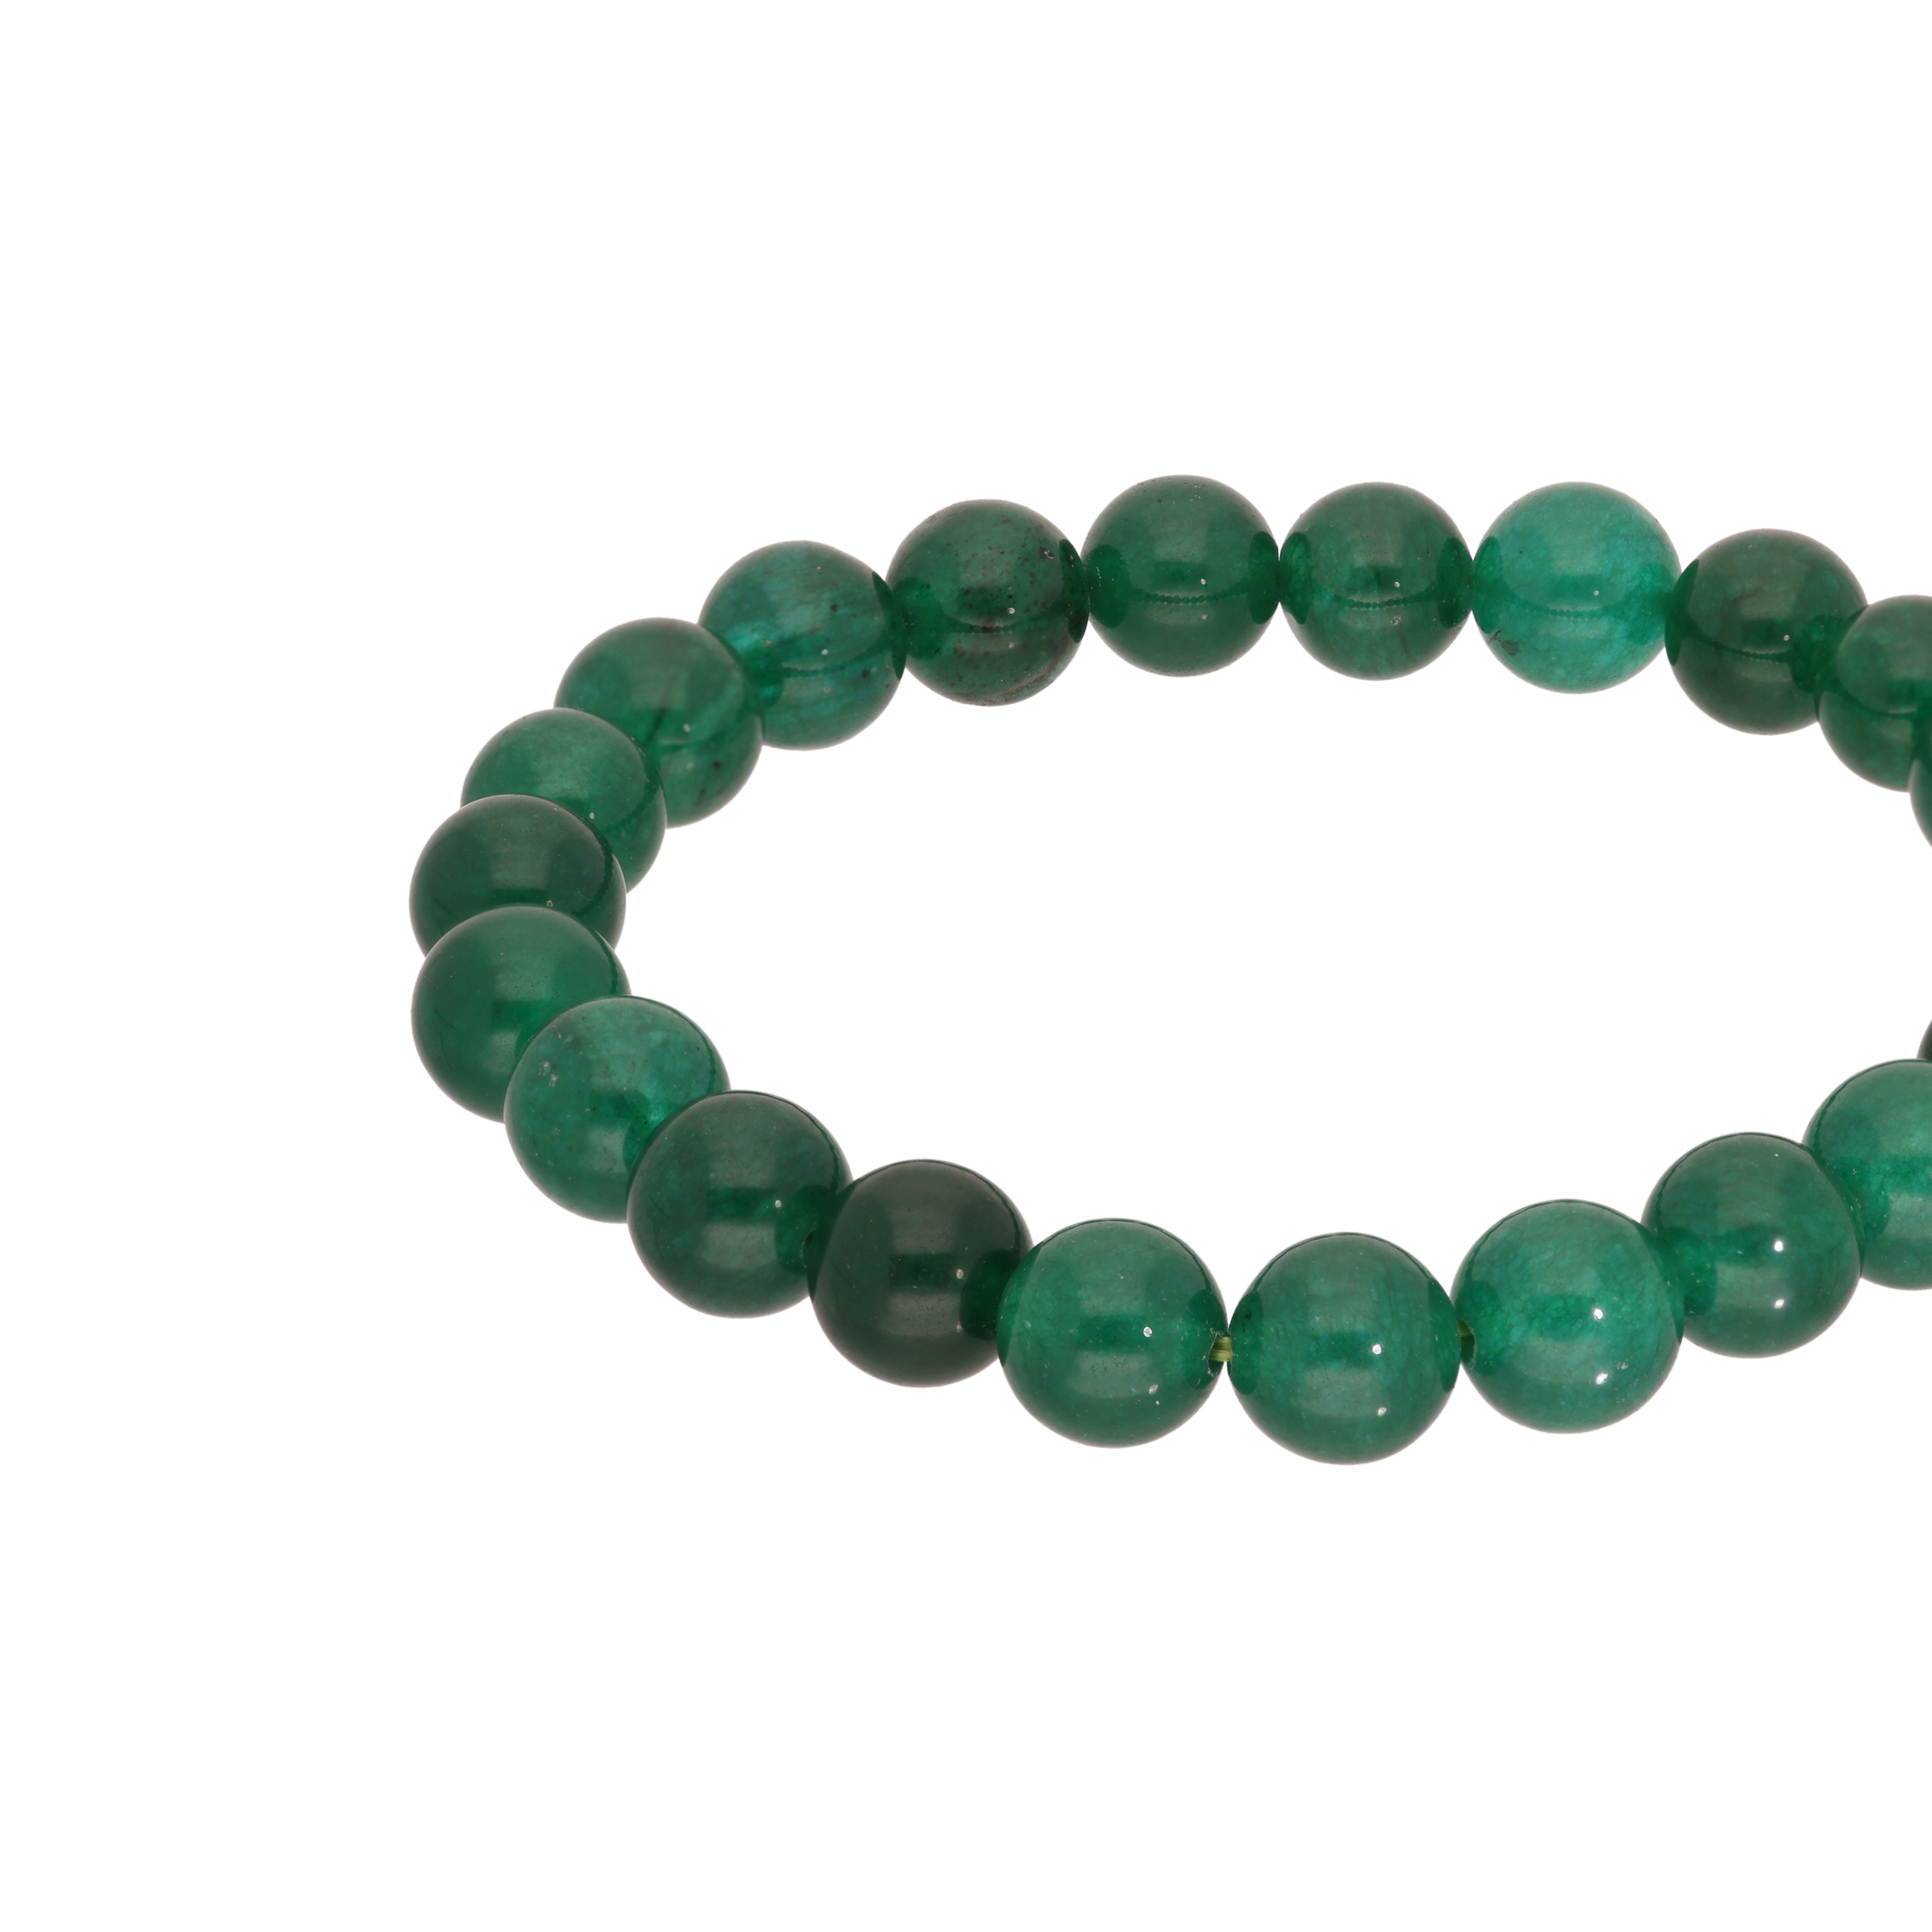 Jade/Nephrite Carved Bracelet | SKU: 0018650136, 0019665610, 0019665580, 0019663944